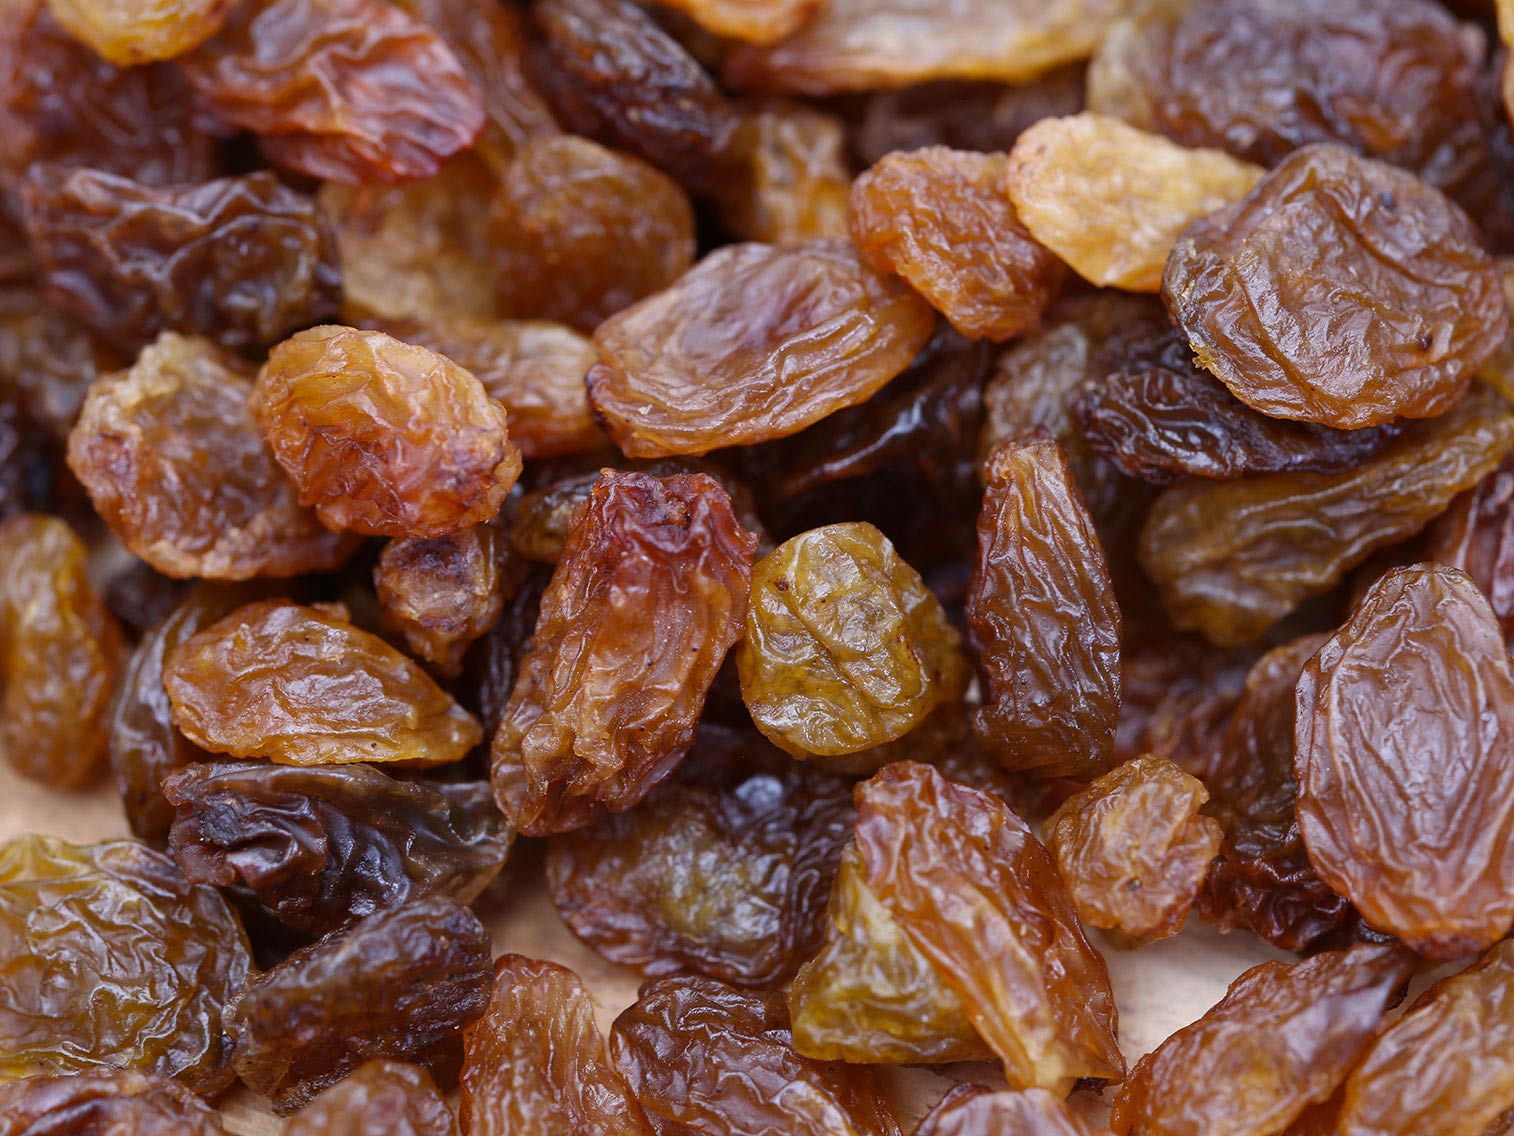 Изюм сена. Изюм Raisins. Изюм (Raisins) Здороведа 250г. Изюм акик Иран. Изюм коричневый гибрид.